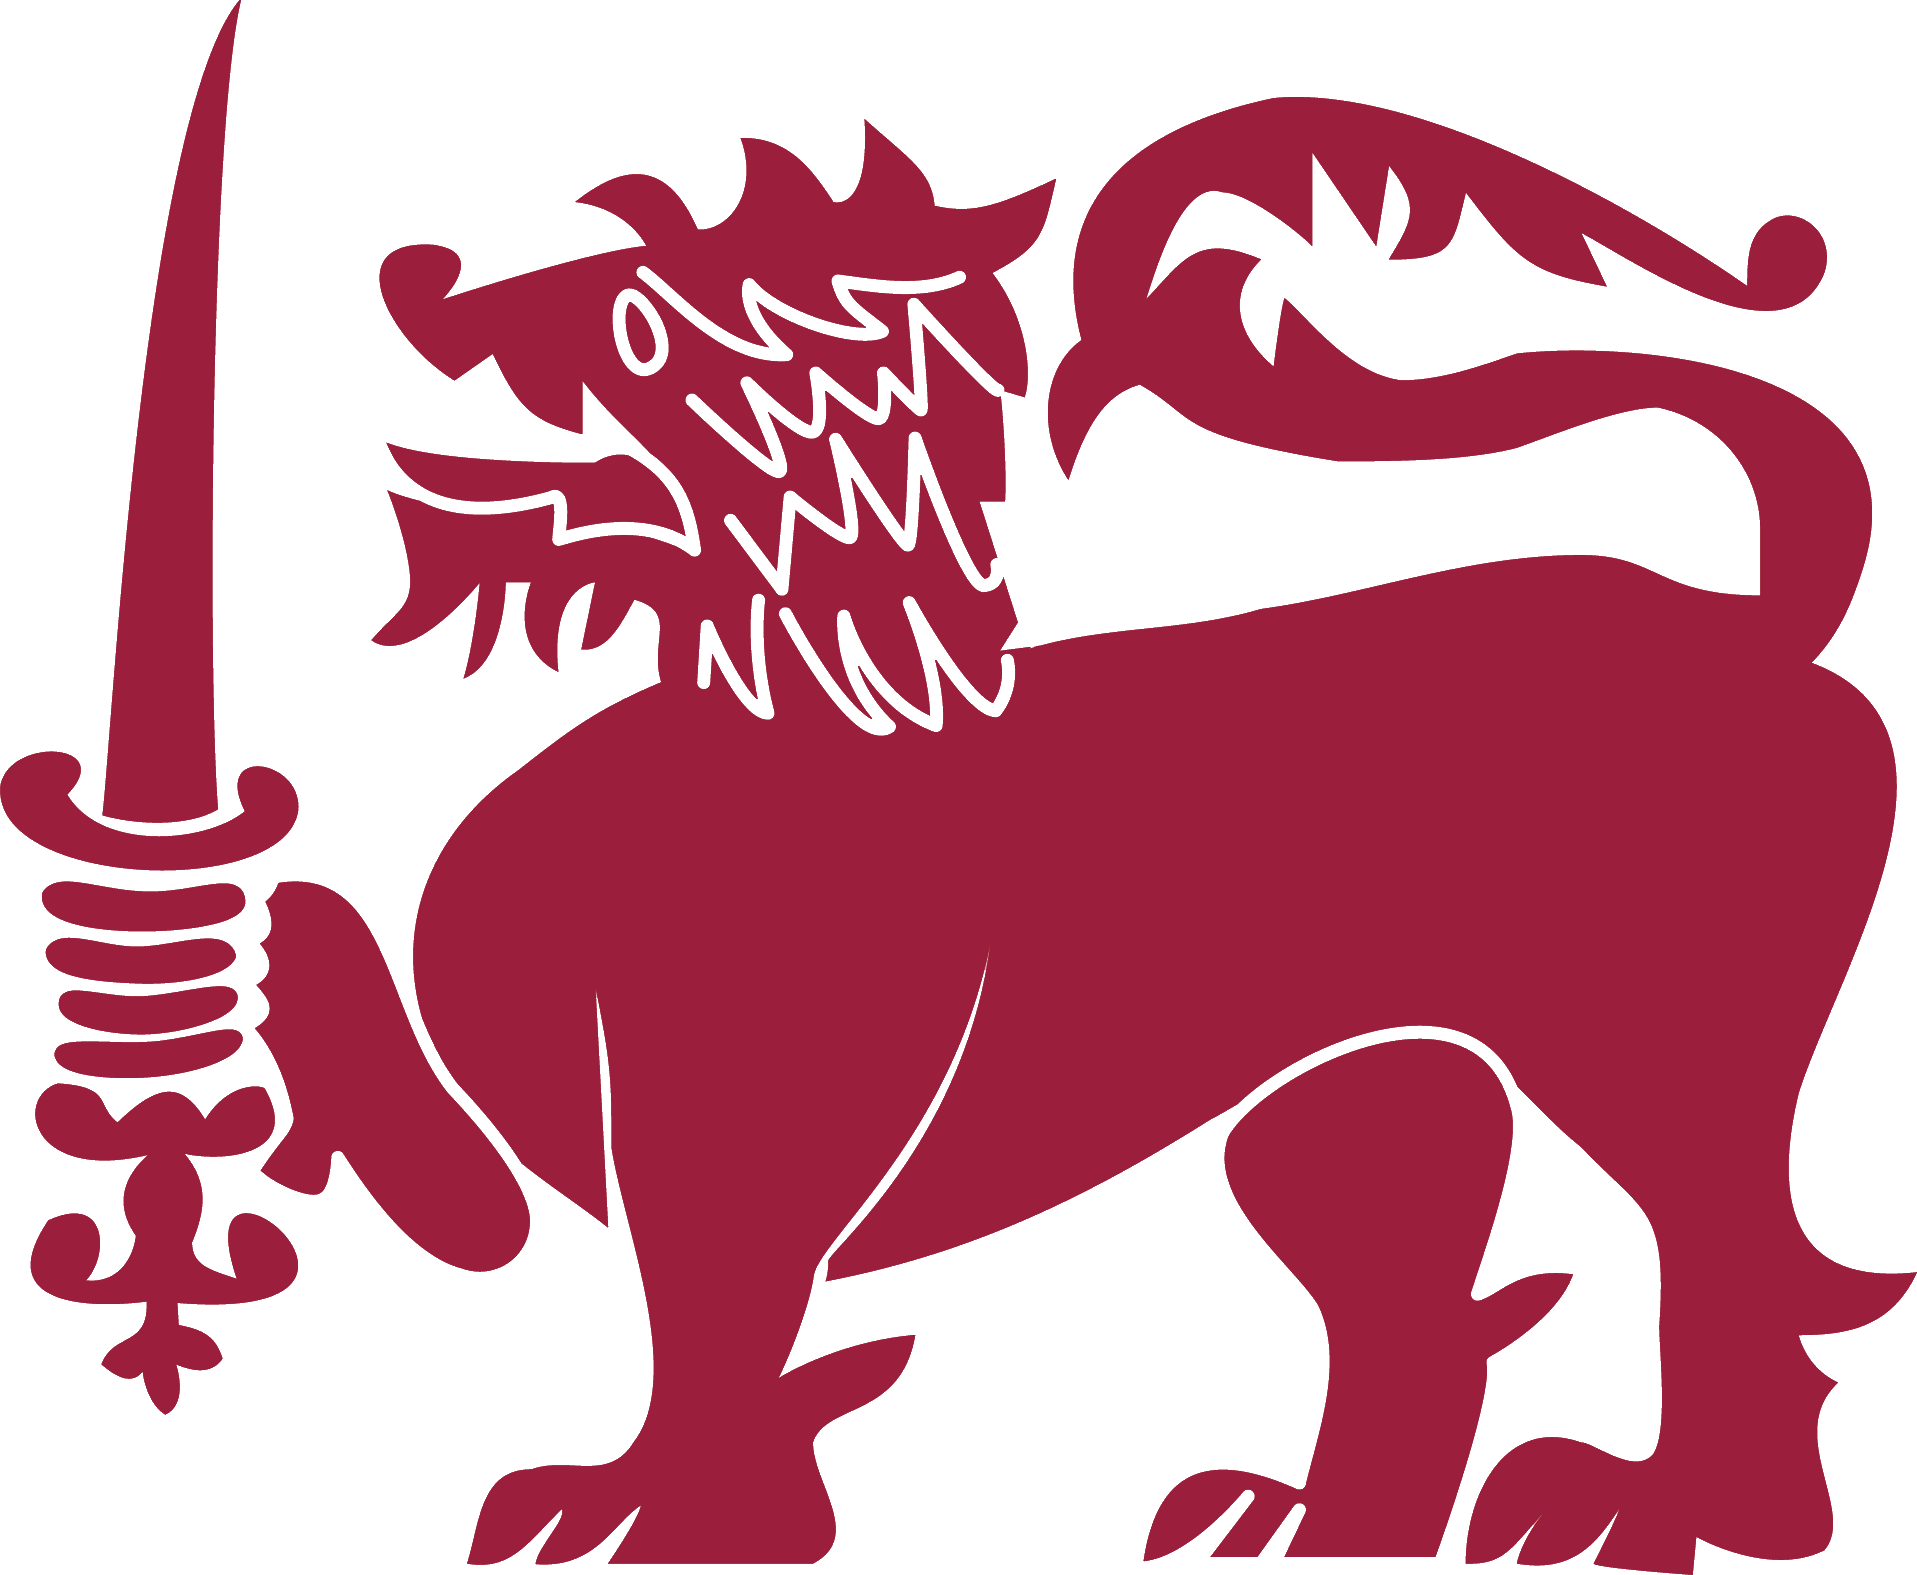 My logo, part of the Sri Lankan flag.